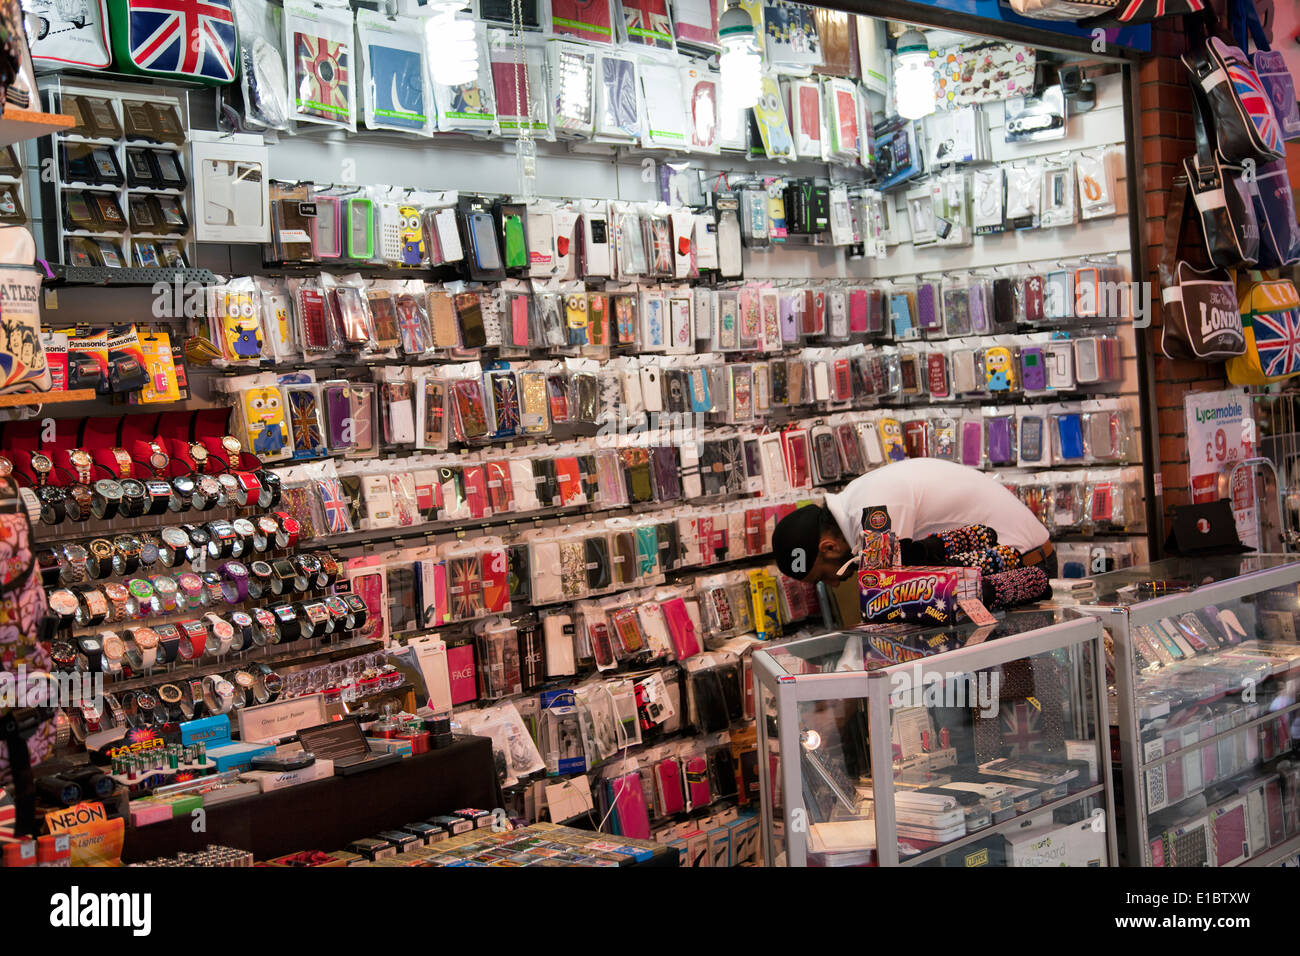 Vendor of Mobile Phone Accessories Merchandise on Newport Crt in london Soho UK Stock Photo Alamy